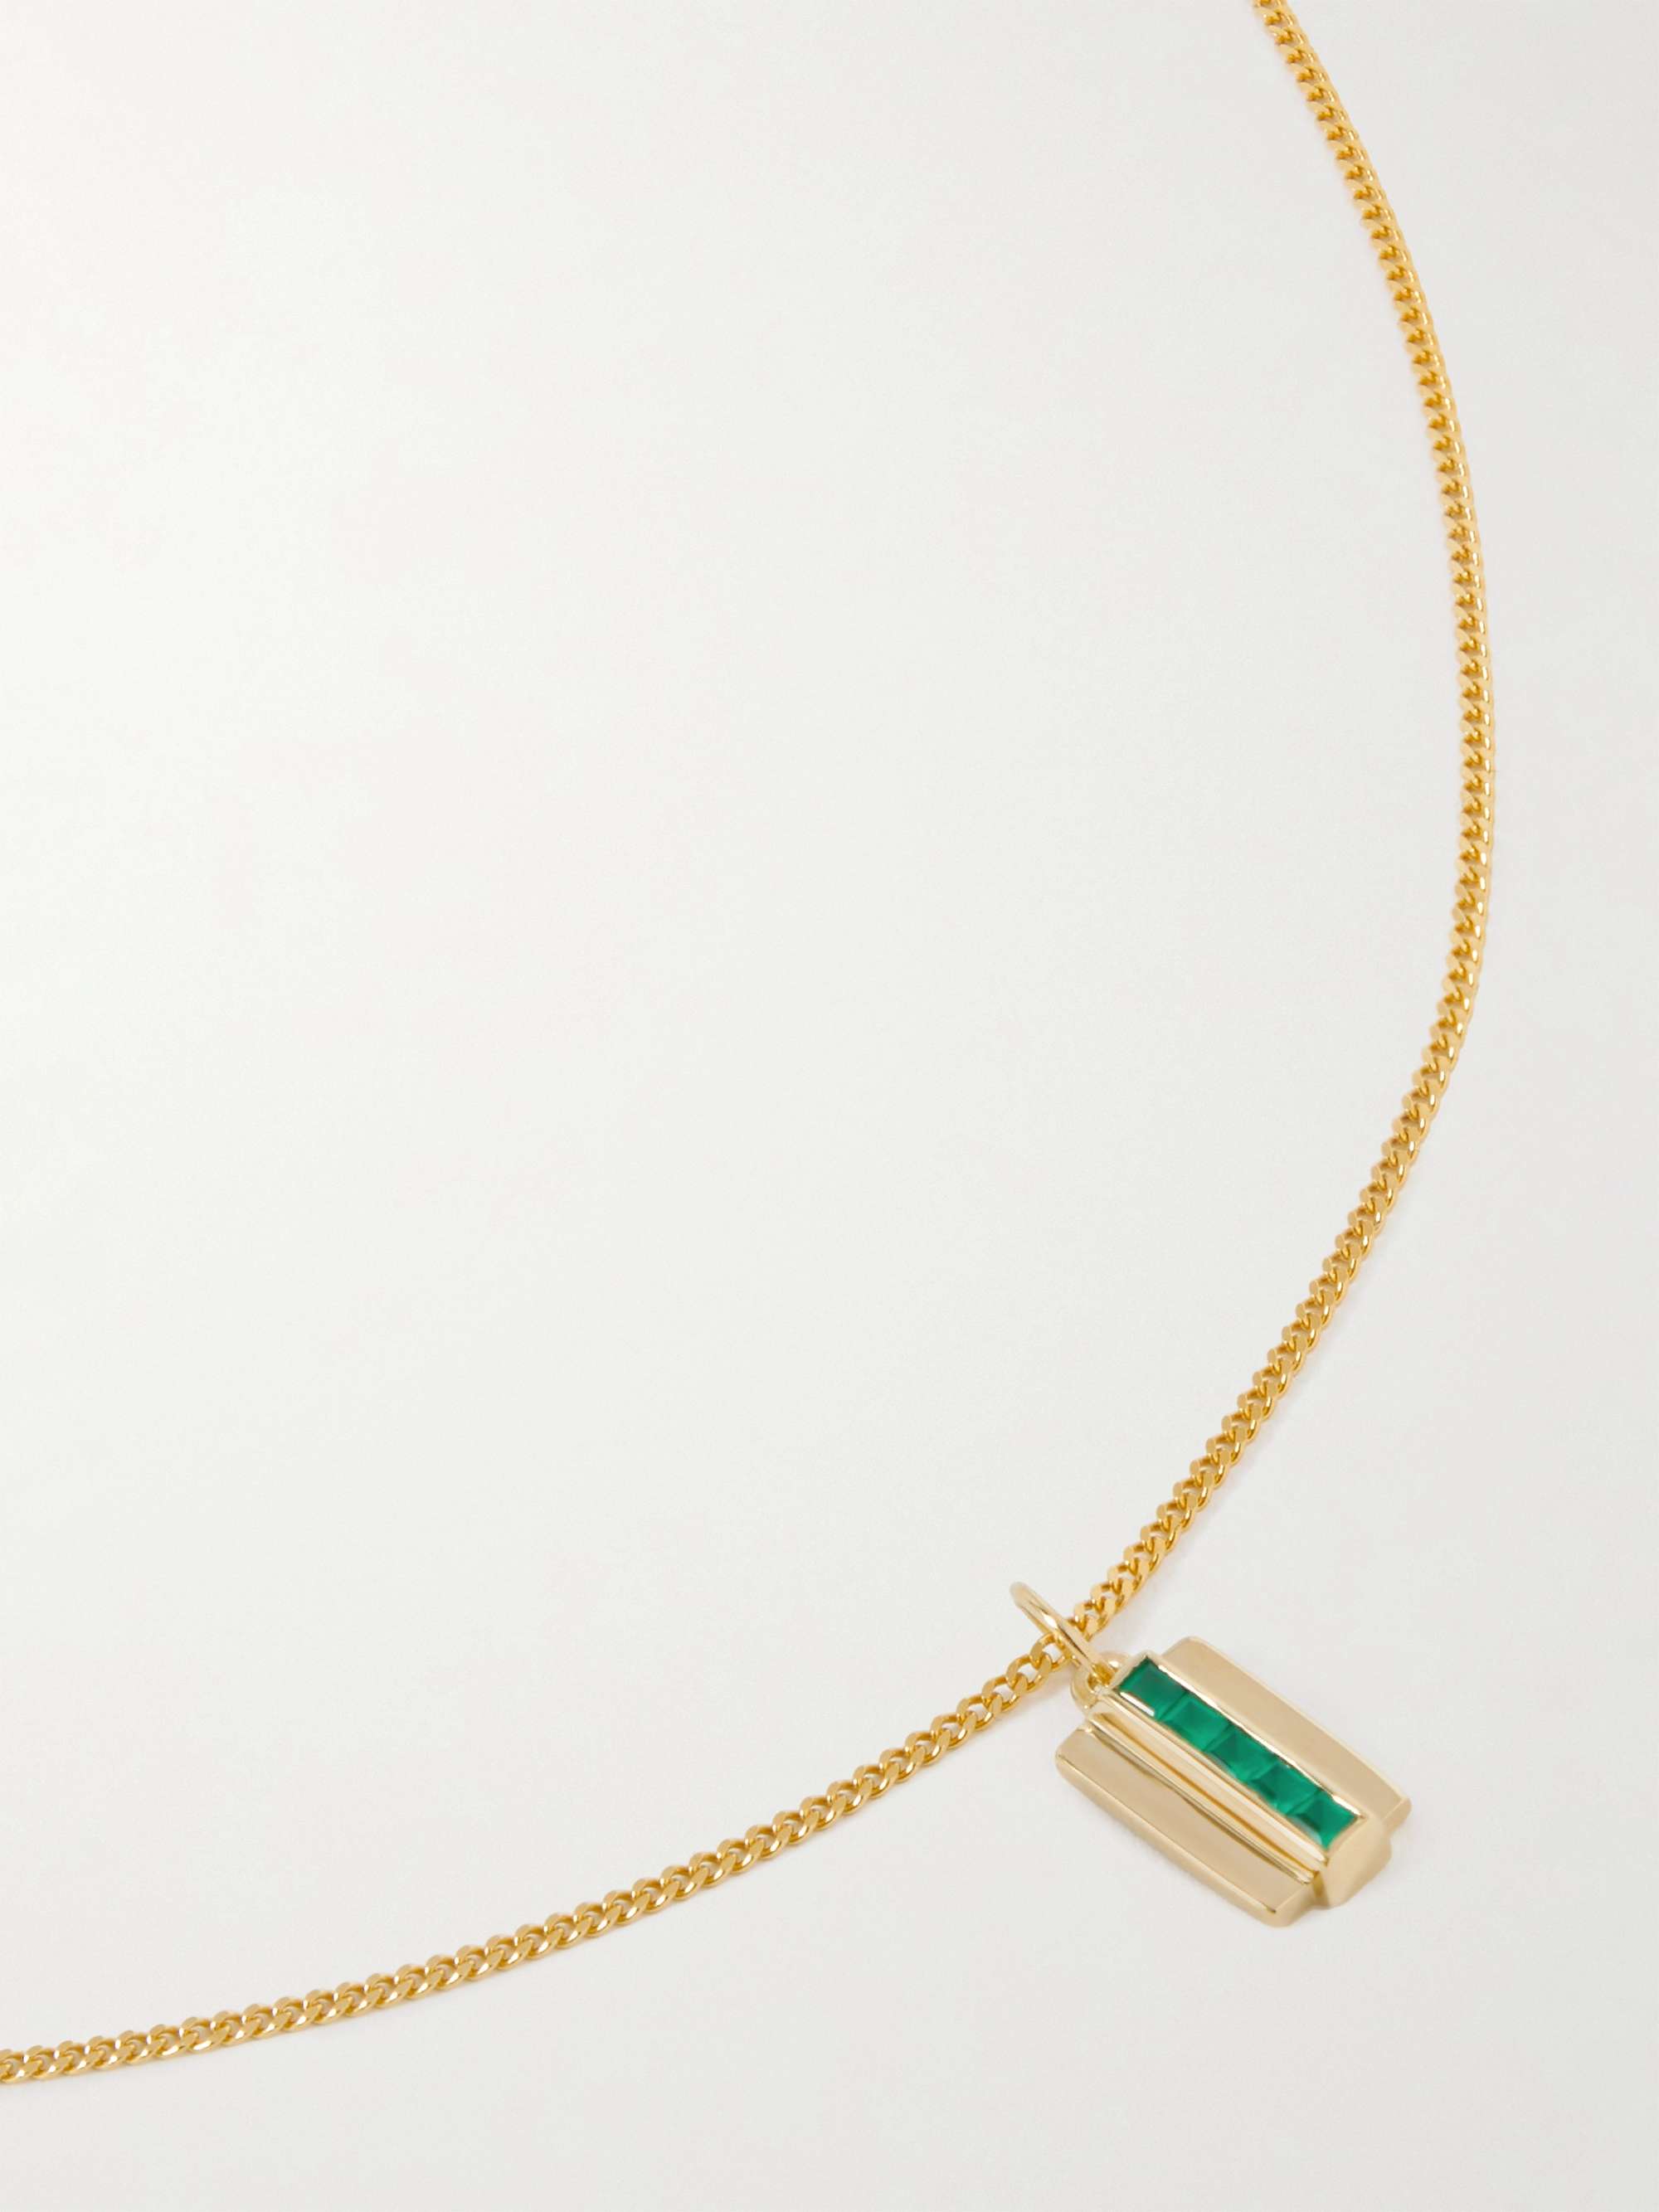 MIANSAI Vertigo Gold Vermeil Agate Pendant Necklace